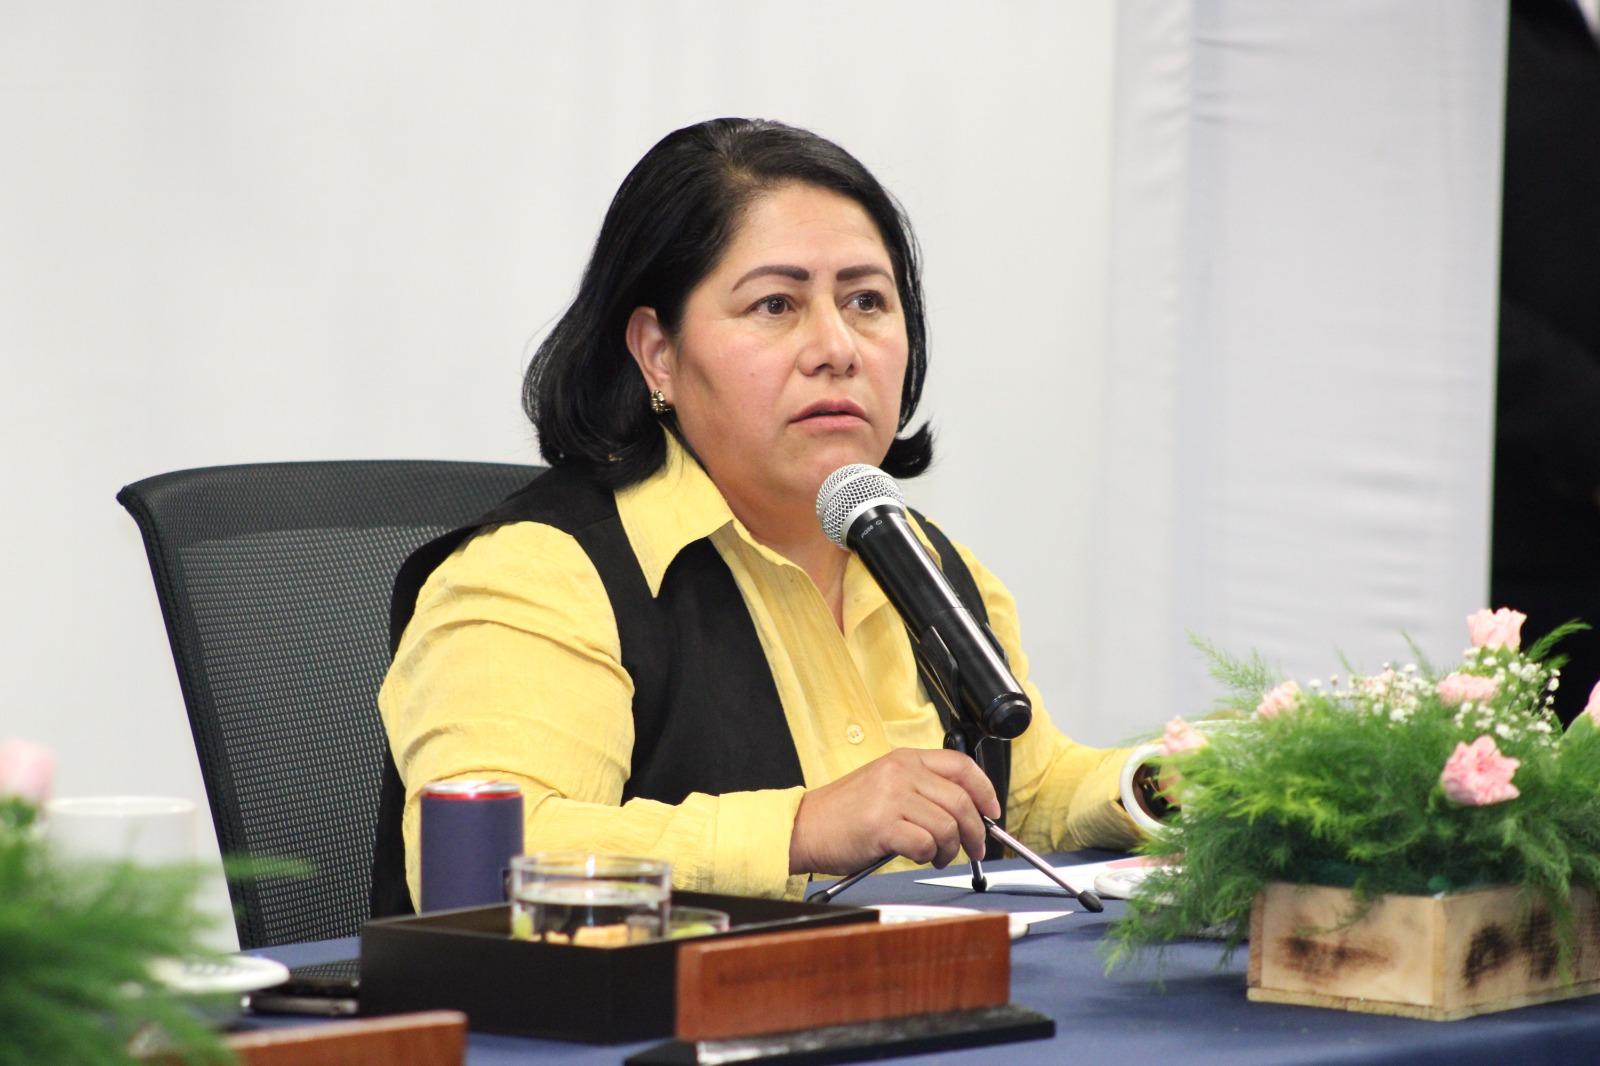 Es Tlaxcala primer lugar en muertes maternas, diputada Blanca Águila cuestiona a titular de Salud